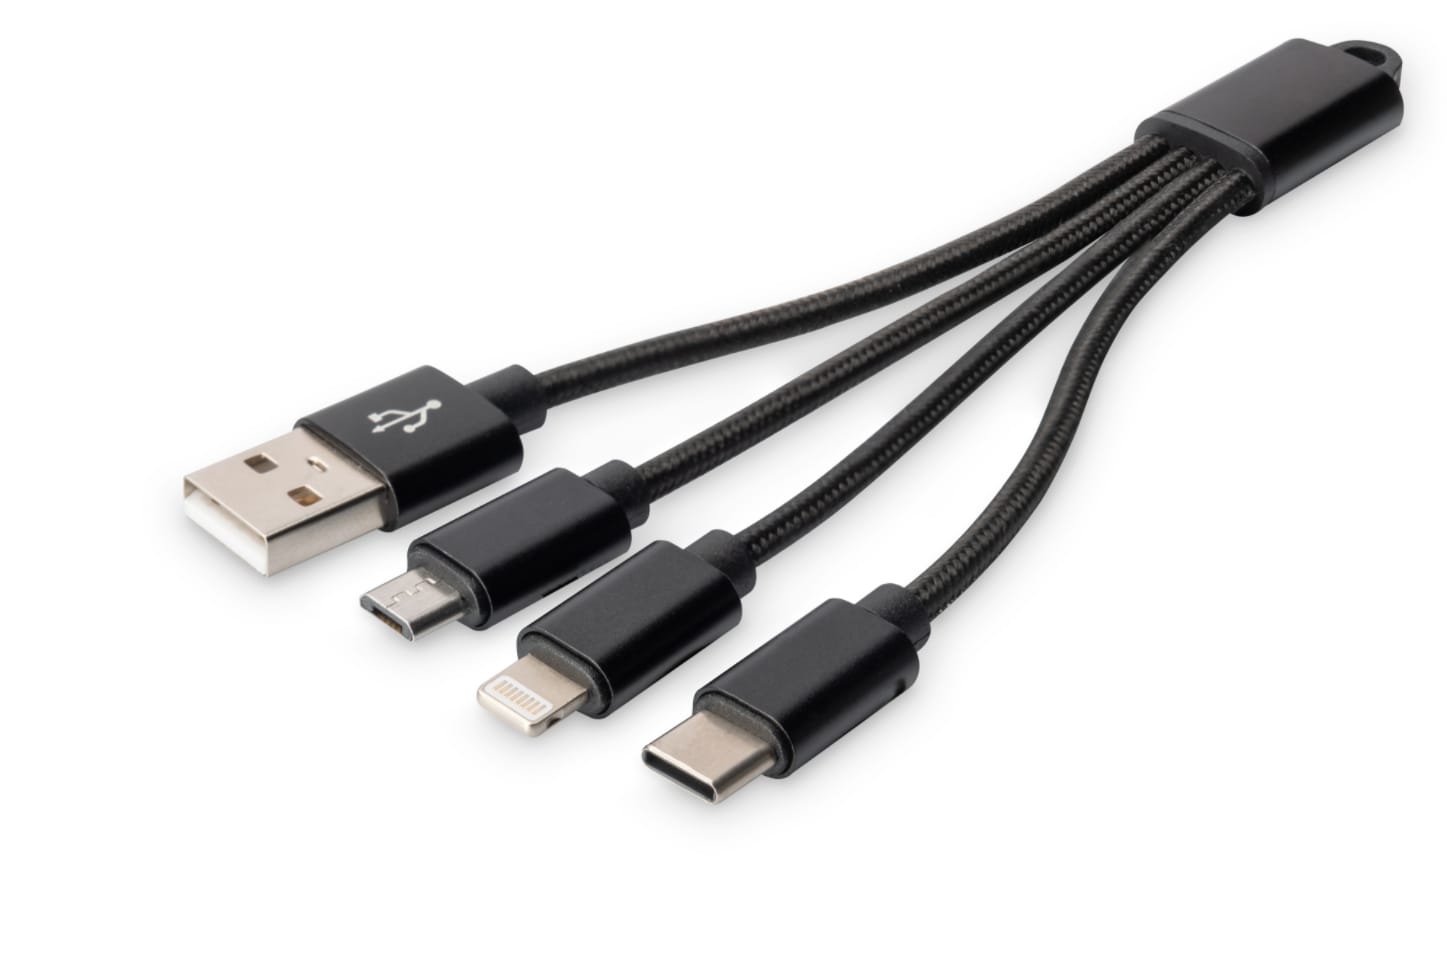 DIGITUS 3-in-1 Ladekabel, USB A - Lightning + Micro USB + USB-C, schwarz ++  Cyberport